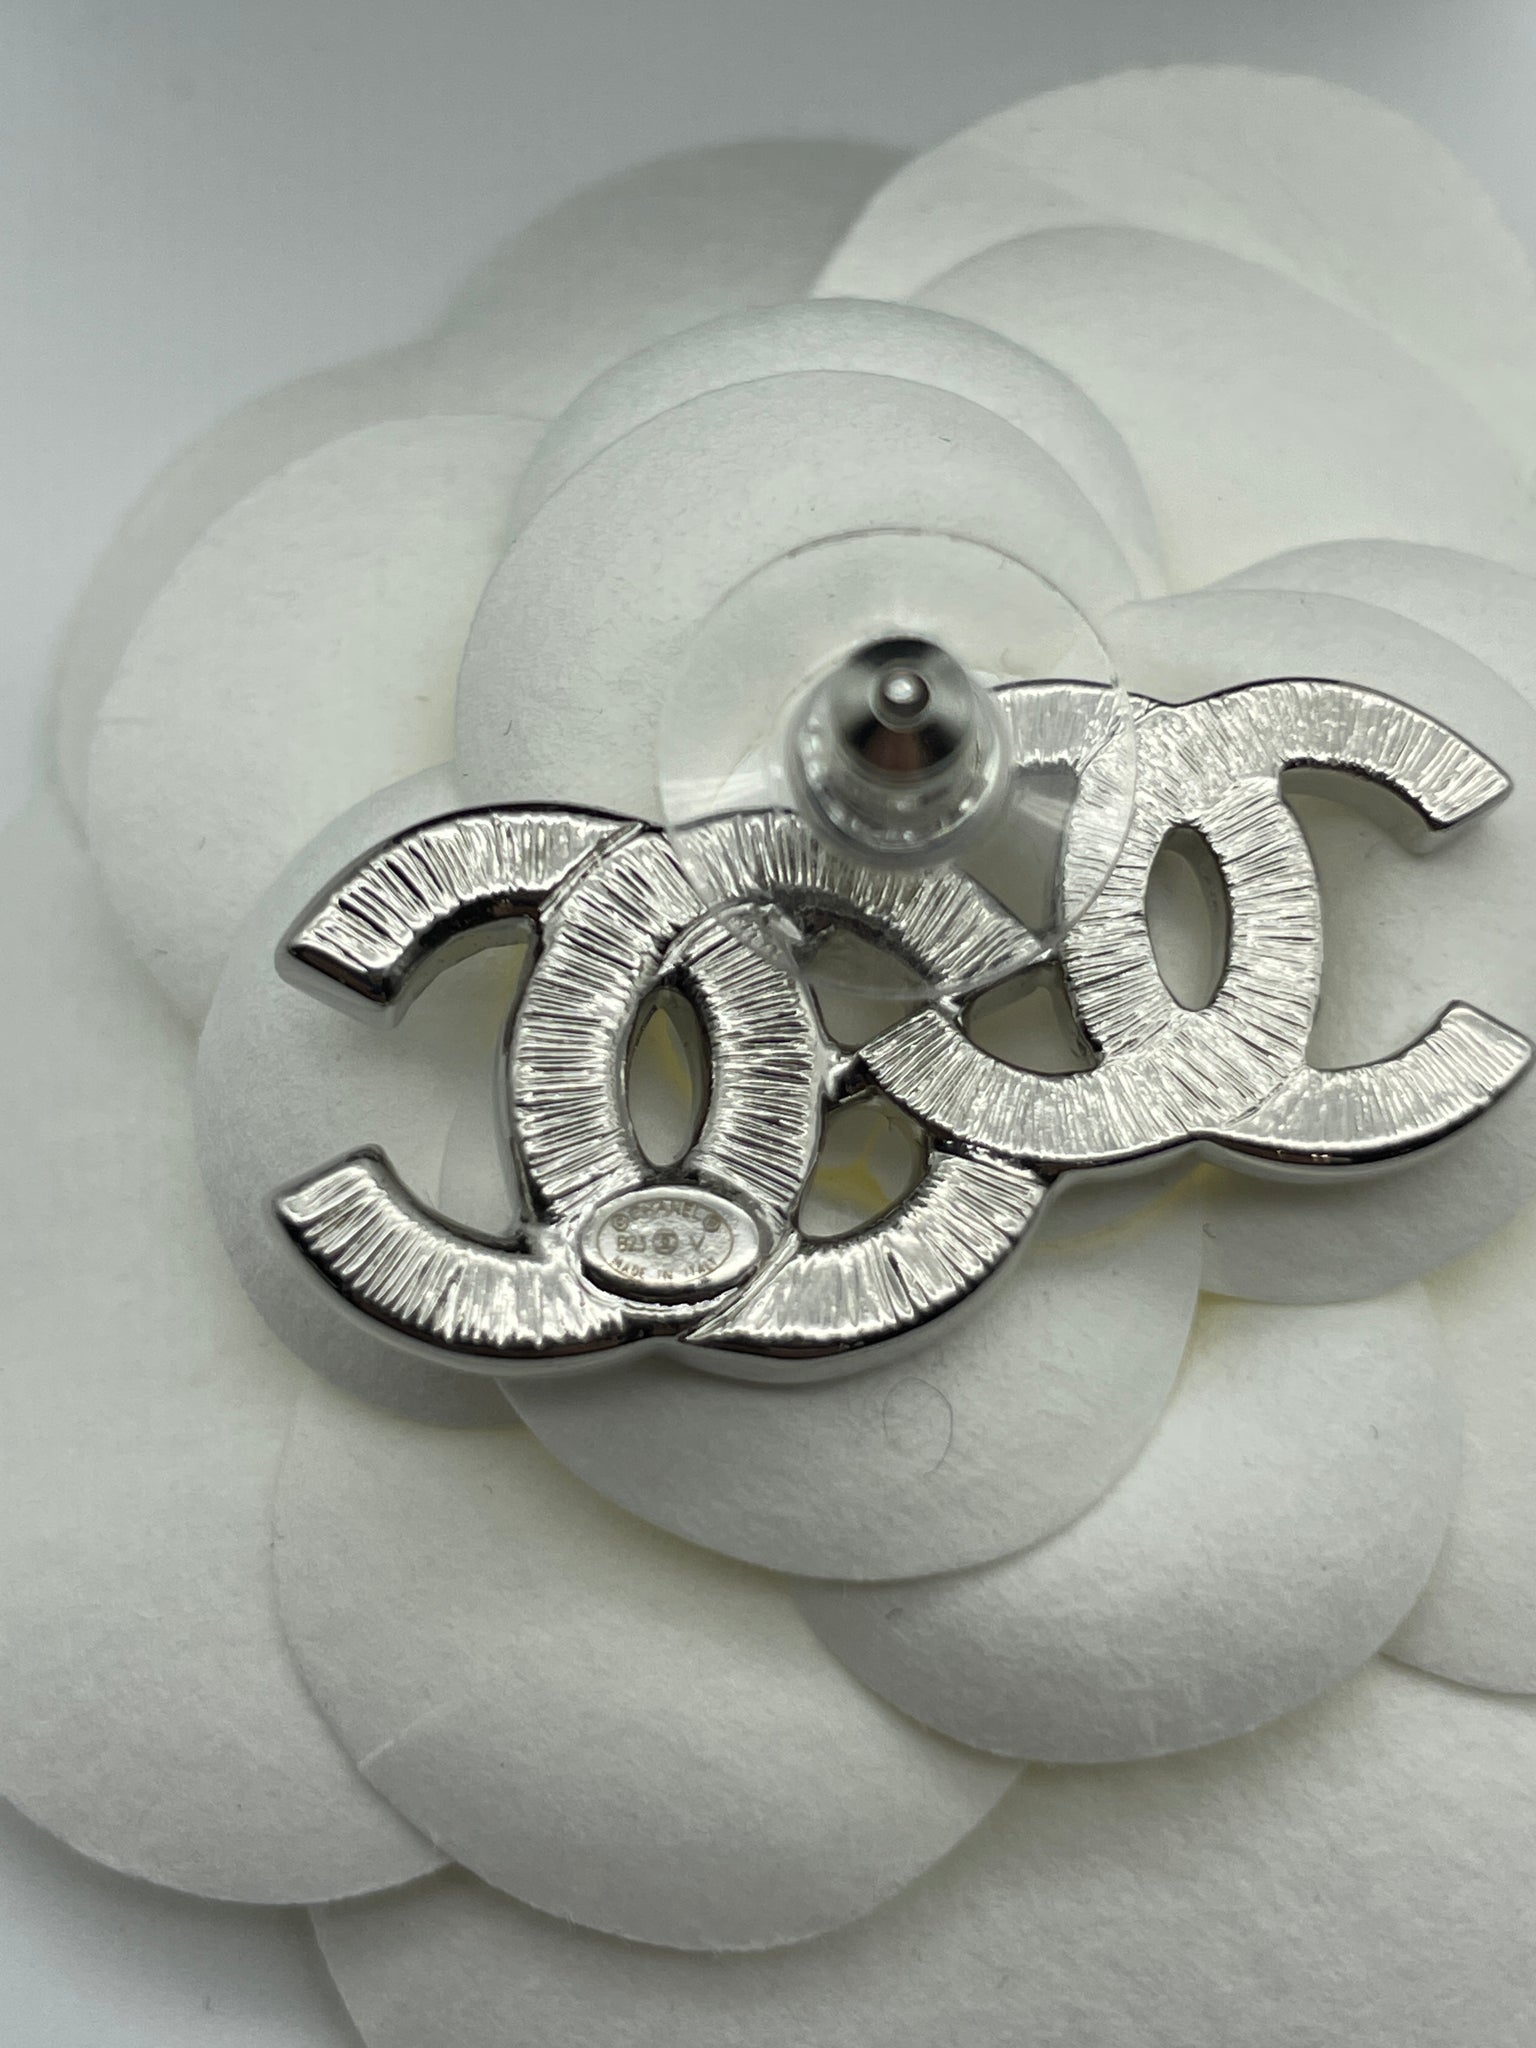 Chanel CC Silver Tone Baguette Crystal Earrings